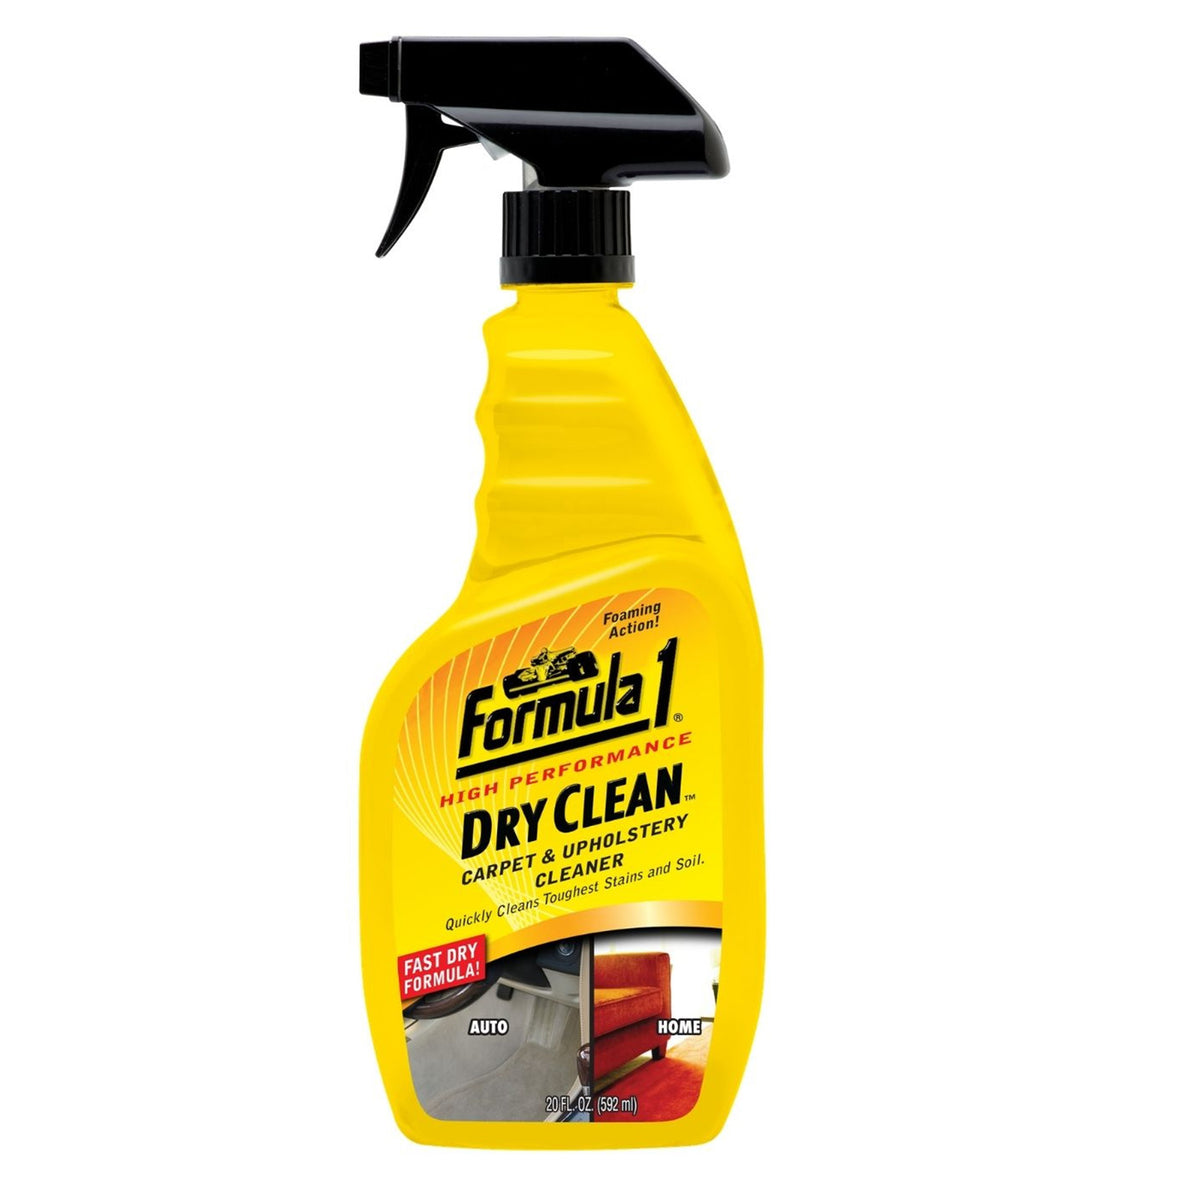 Car Dry cleaning sprayCapacity: 592 ml